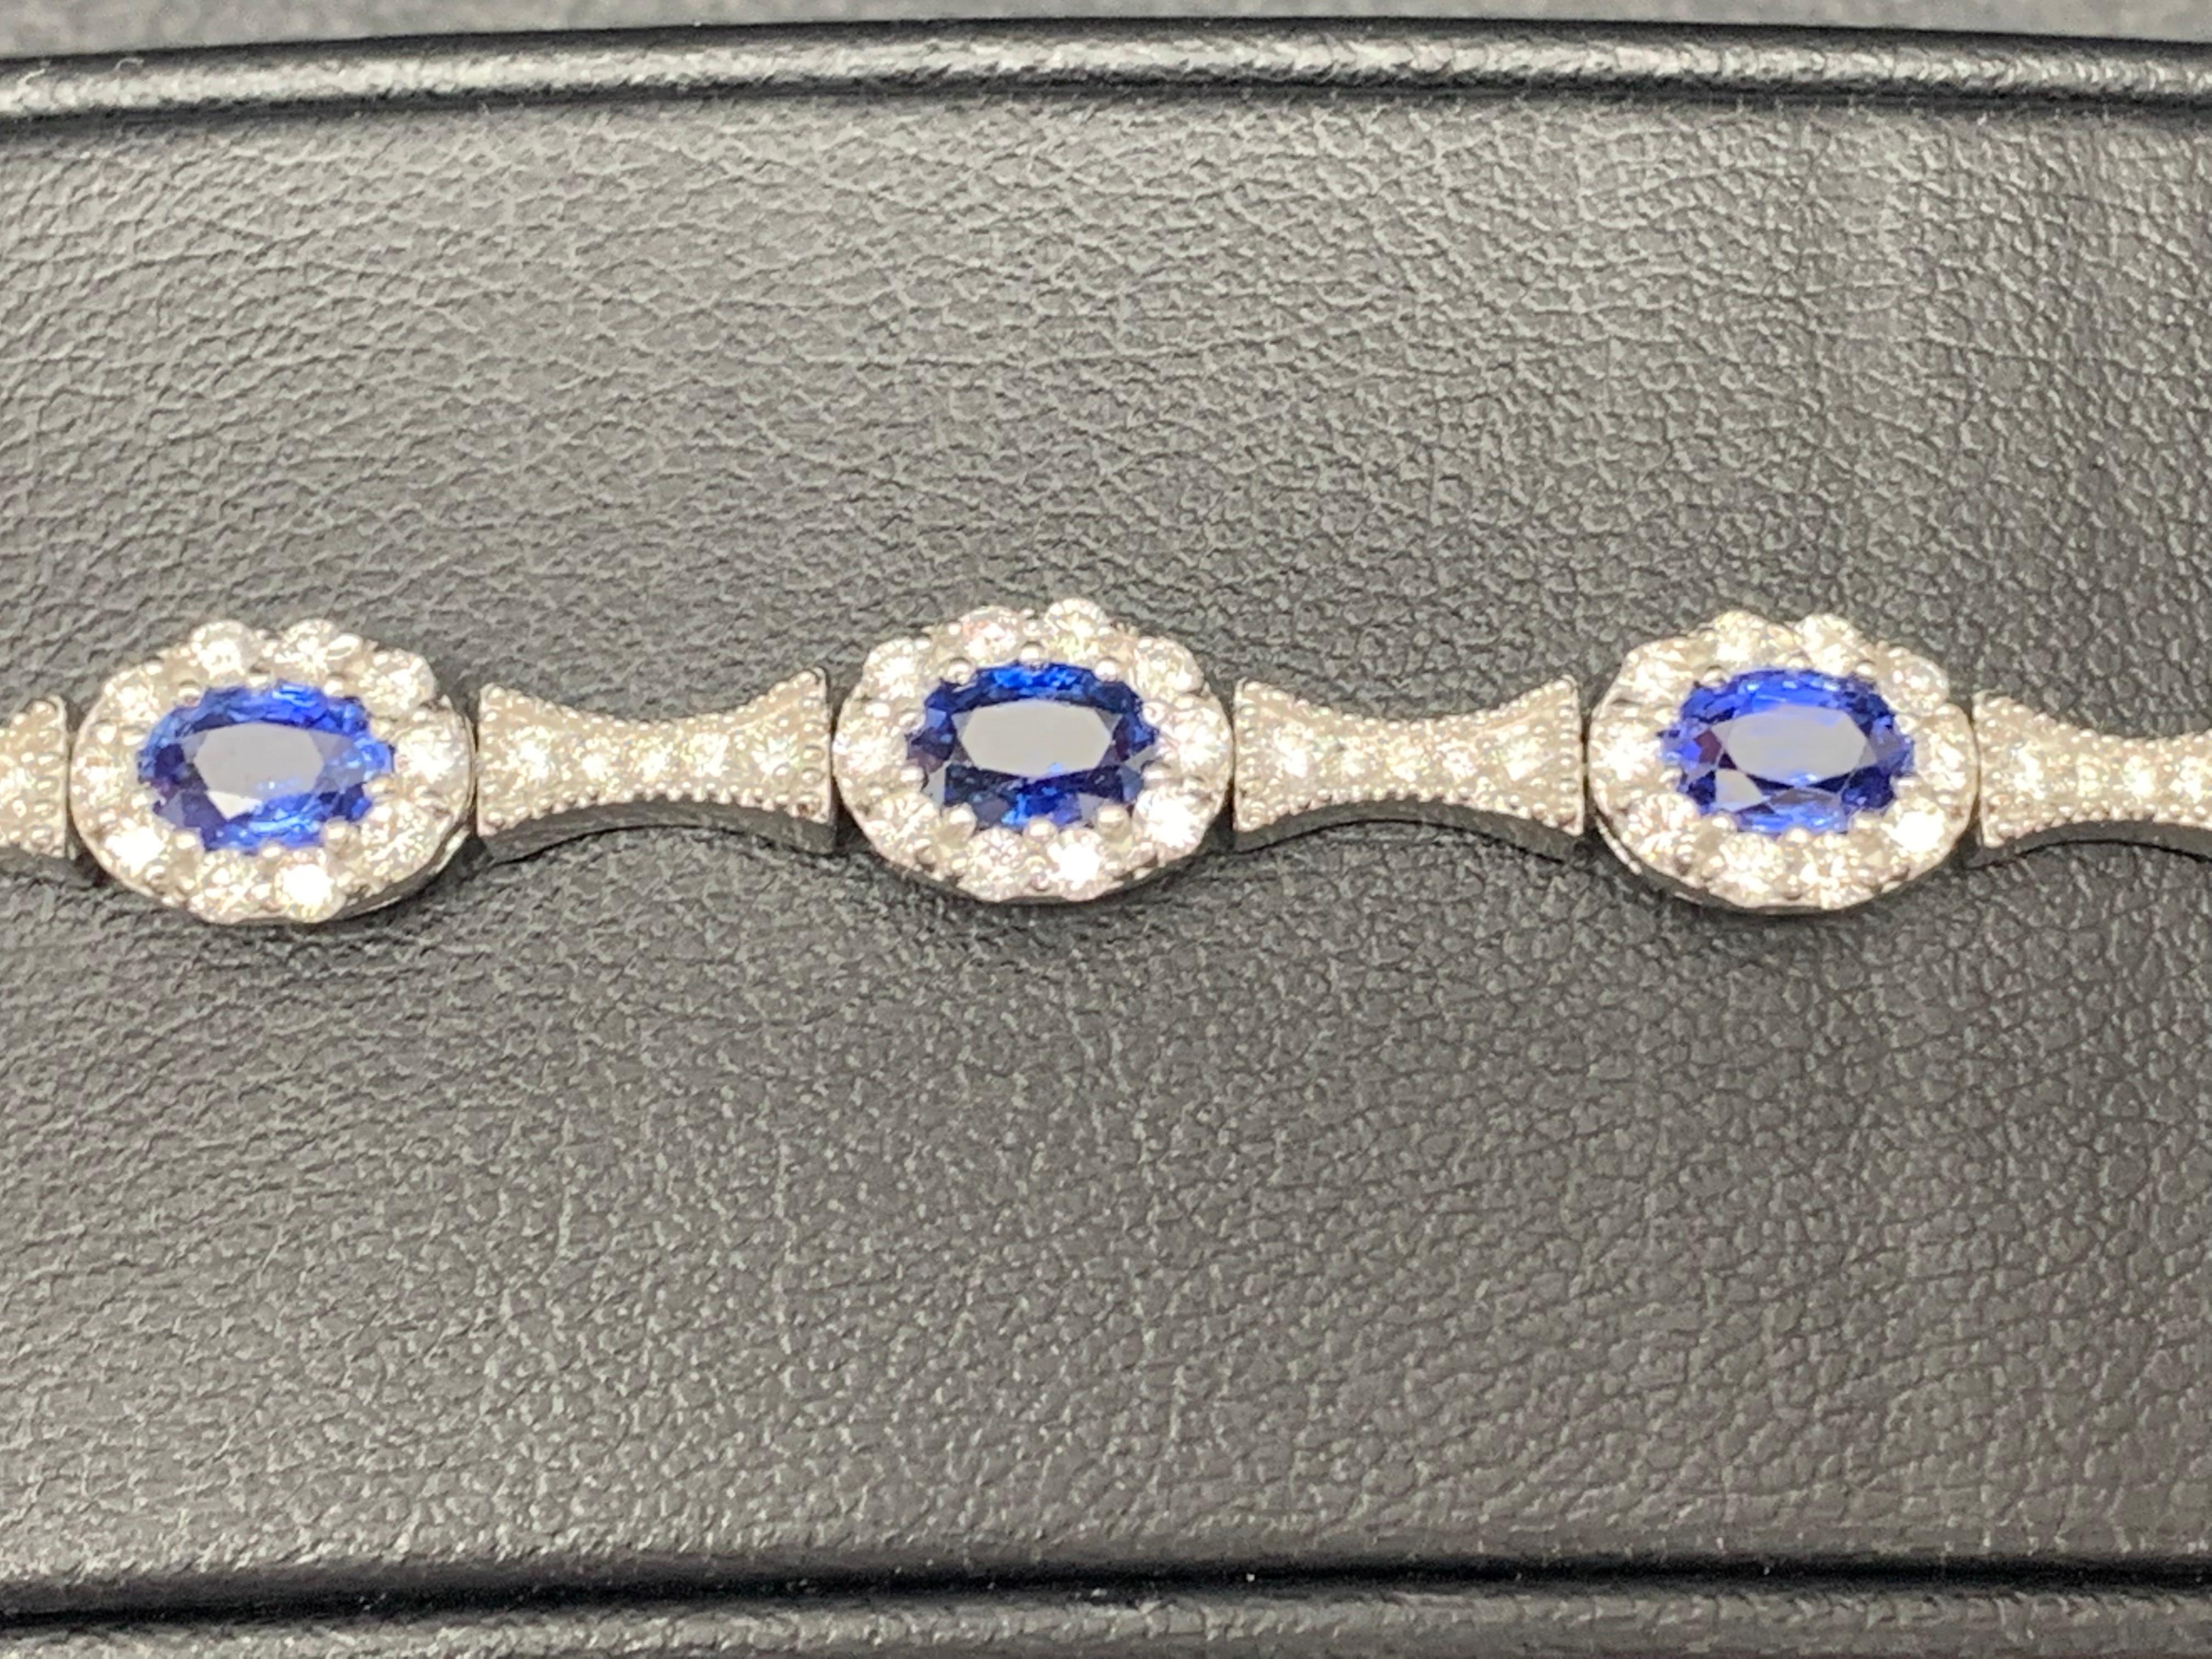 6.19 Carat Oval Cut Blue Sapphire Diamond Bracelet in 14K White Gold For Sale 2